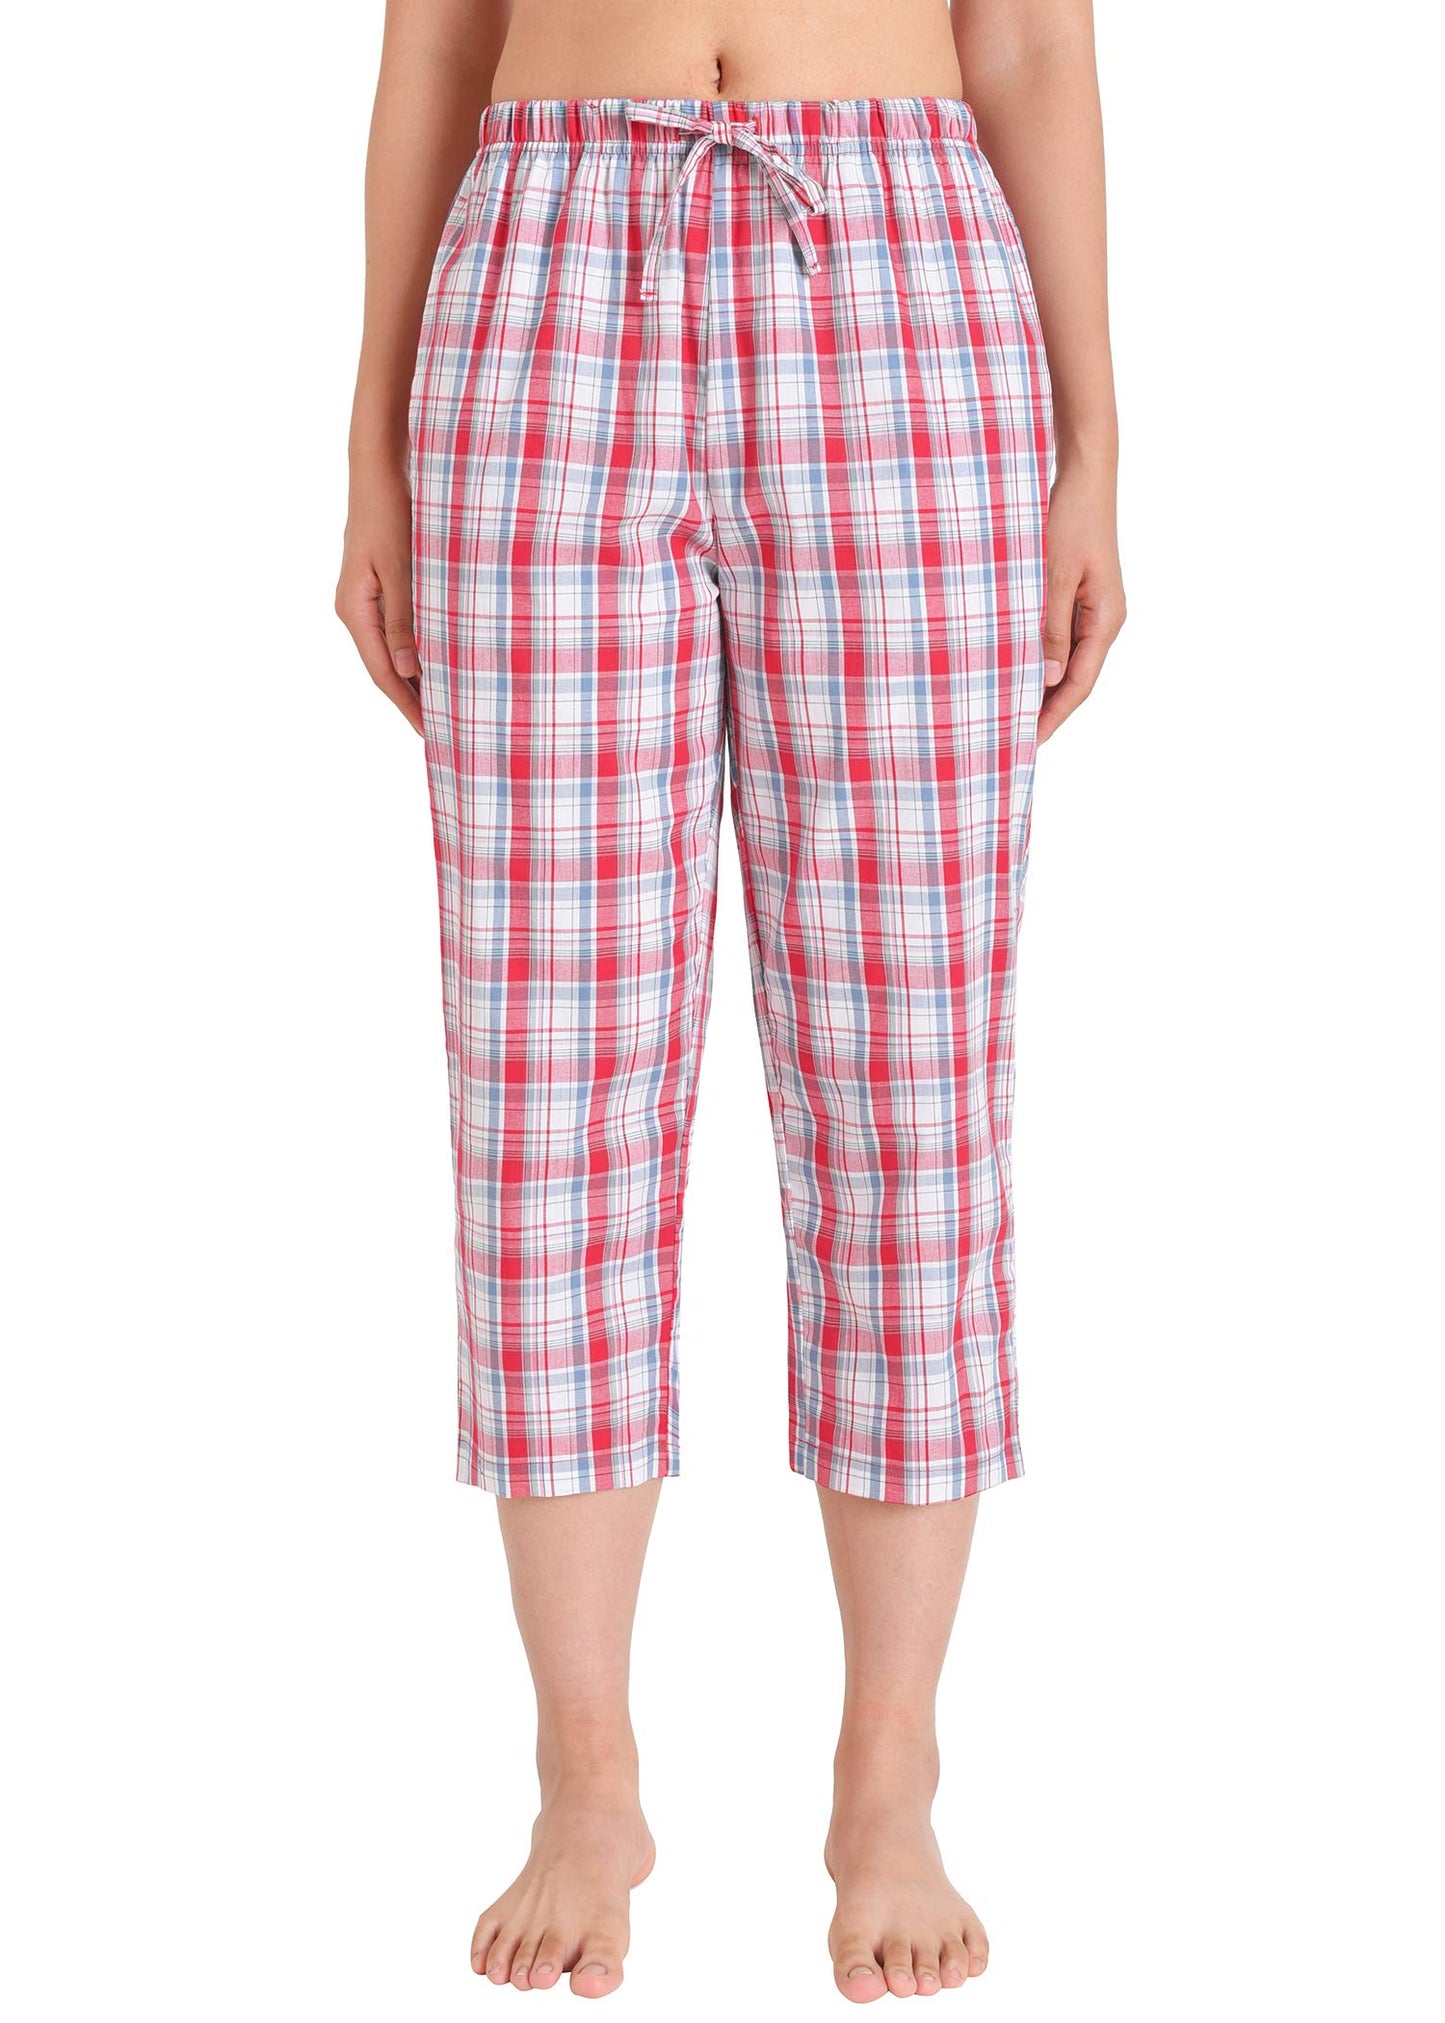 Women's Capri Pajama Pants Cotton PJ Bottoms with Pockets - Latuza